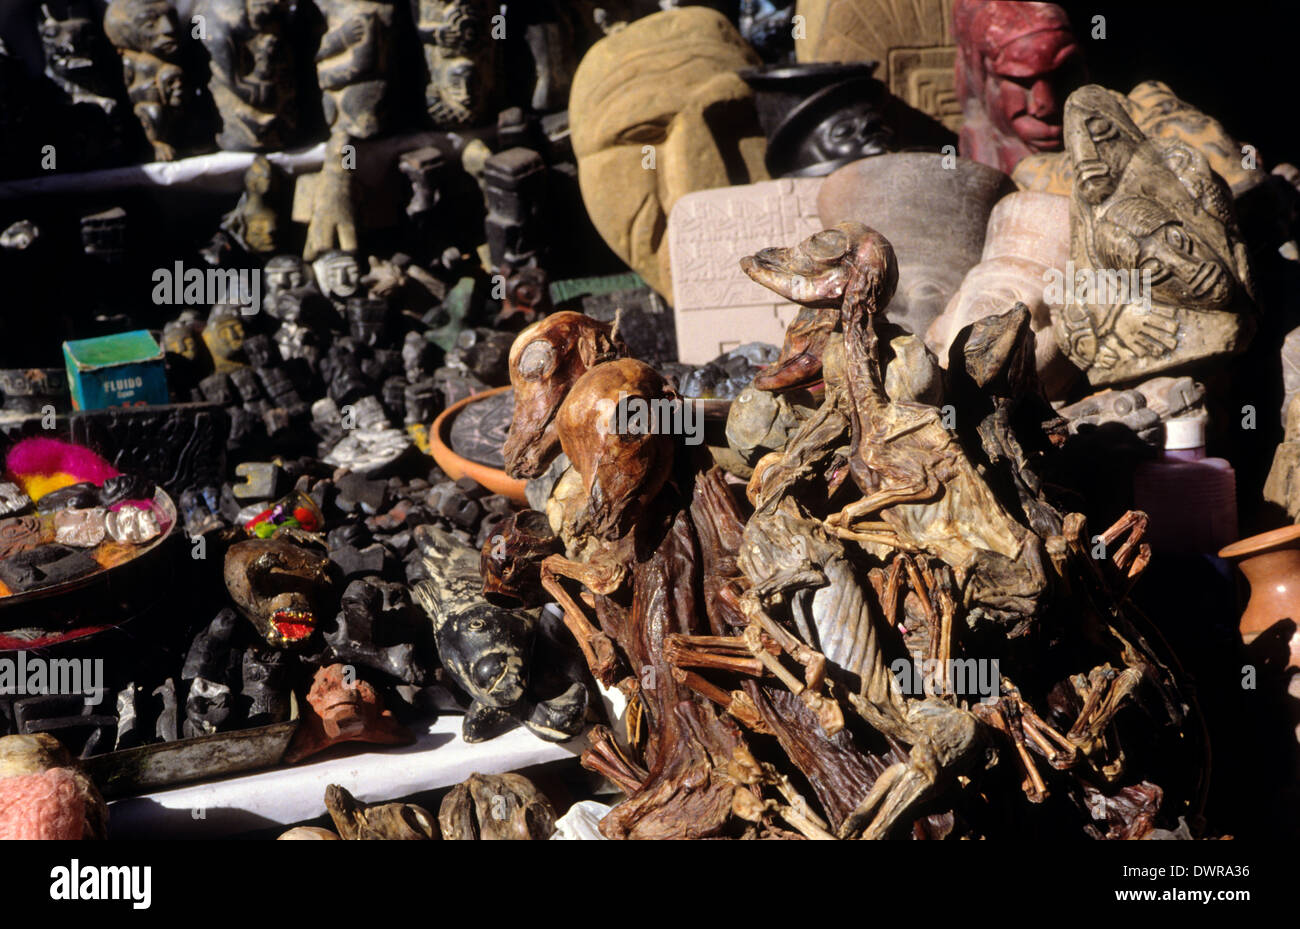 Llama fetuses and amulets in the Mercado de la Hechiceria ( Sorcery market). La Paz .Bolivia. Stock Photo